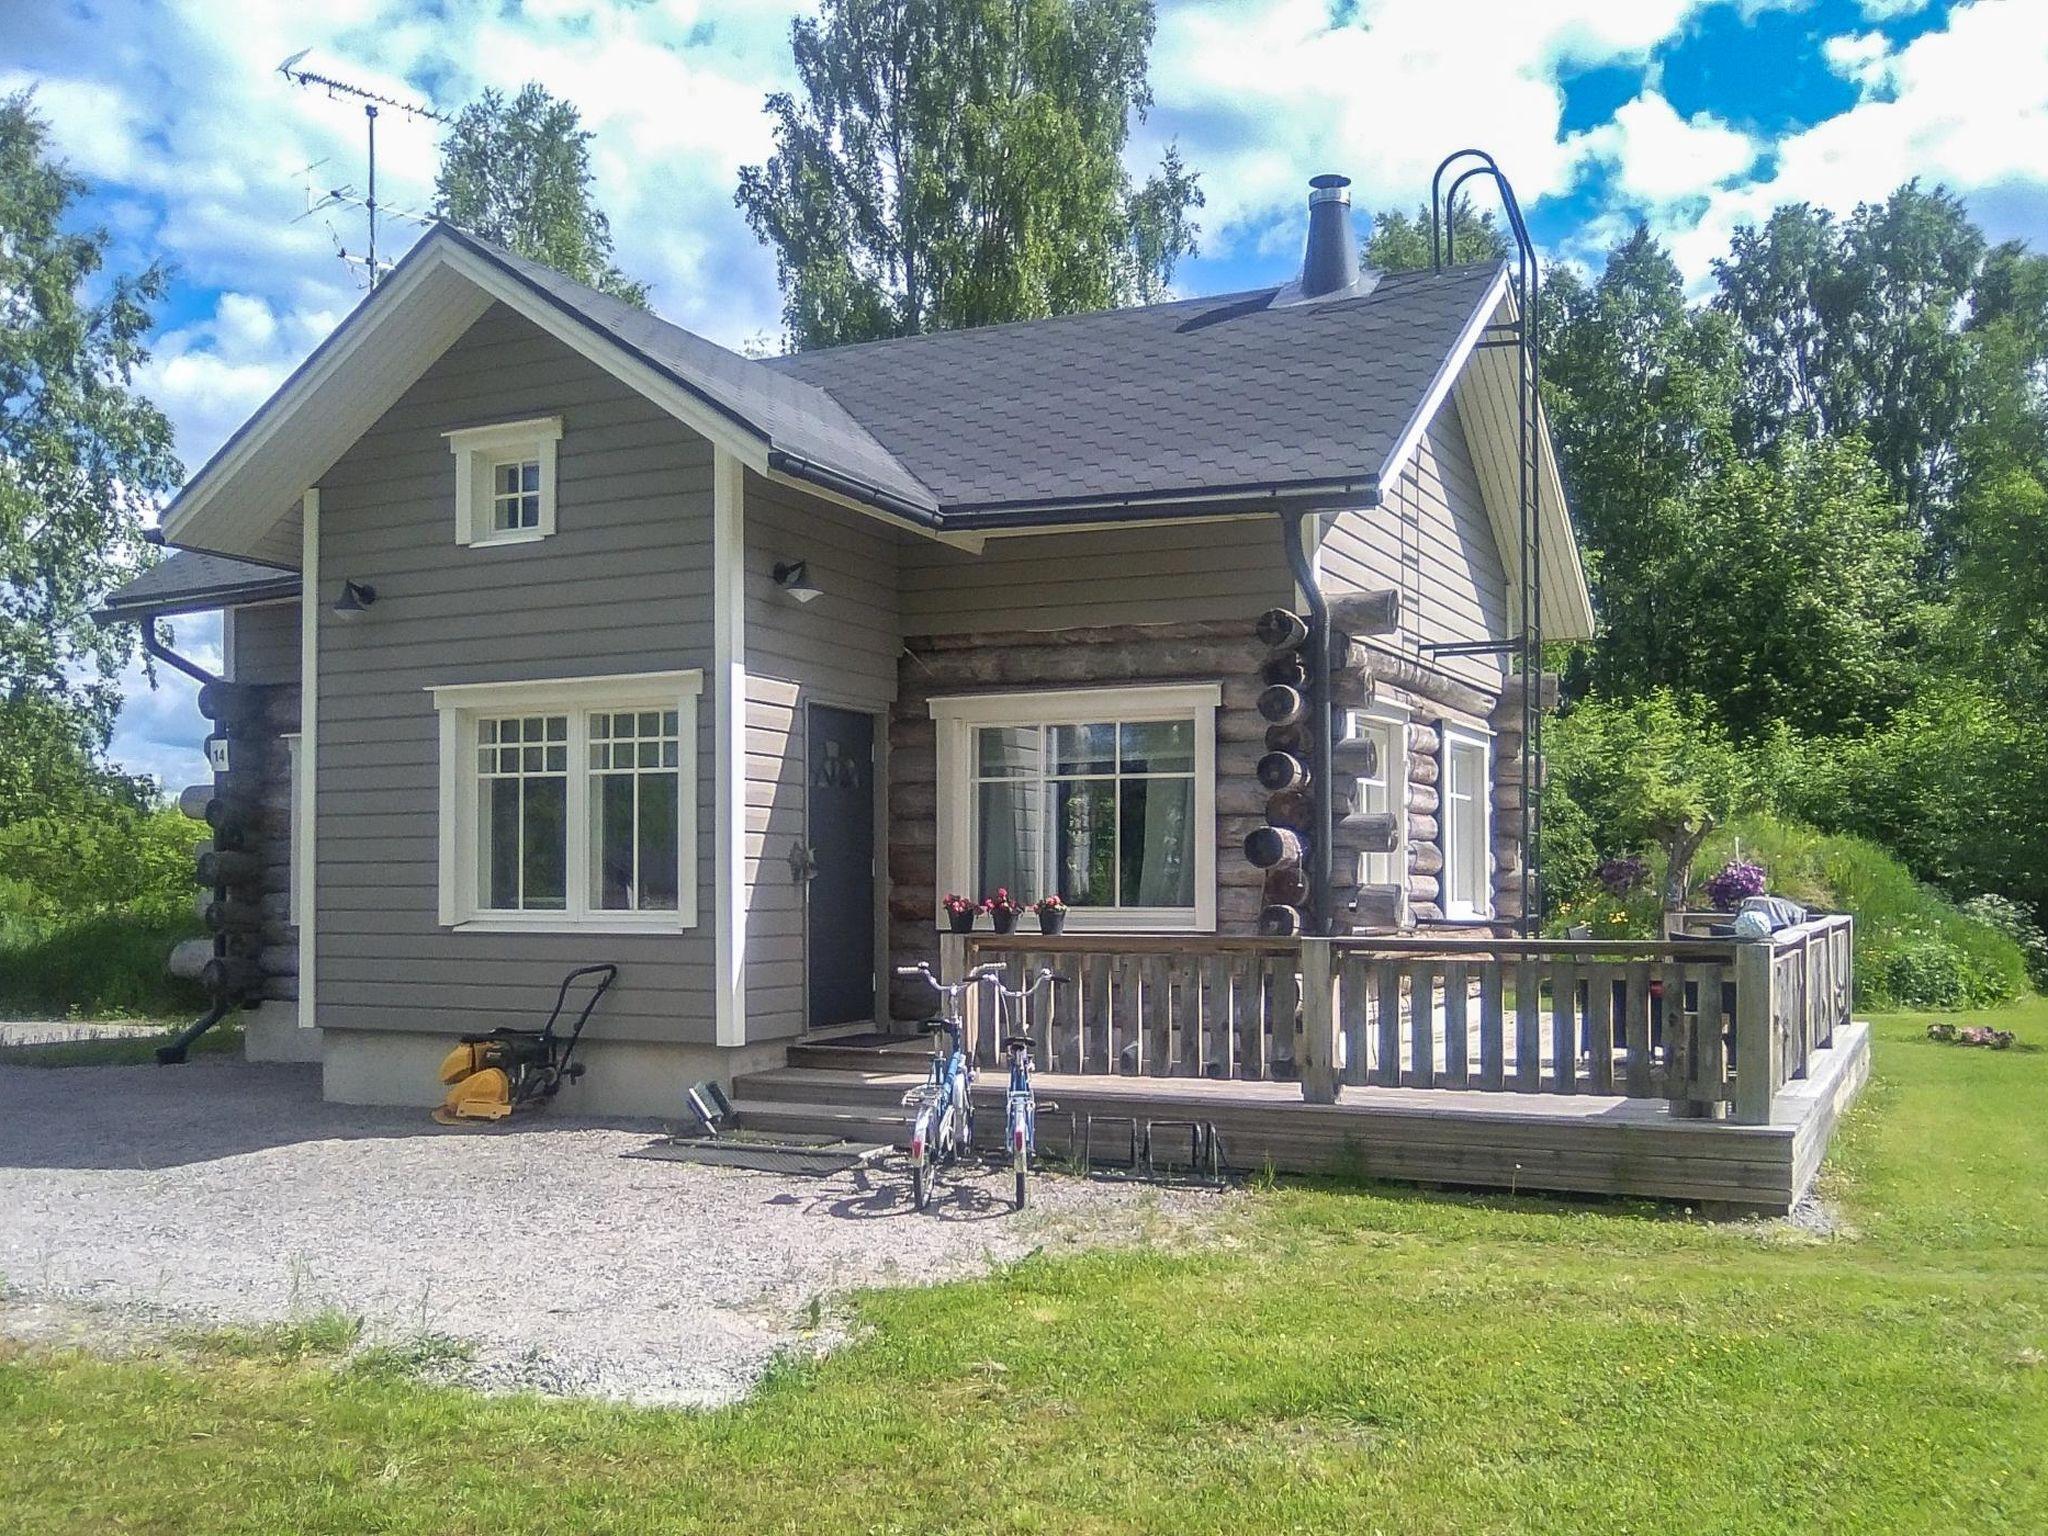 Photo 1 - 1 bedroom House in Pyhäjoki with sauna